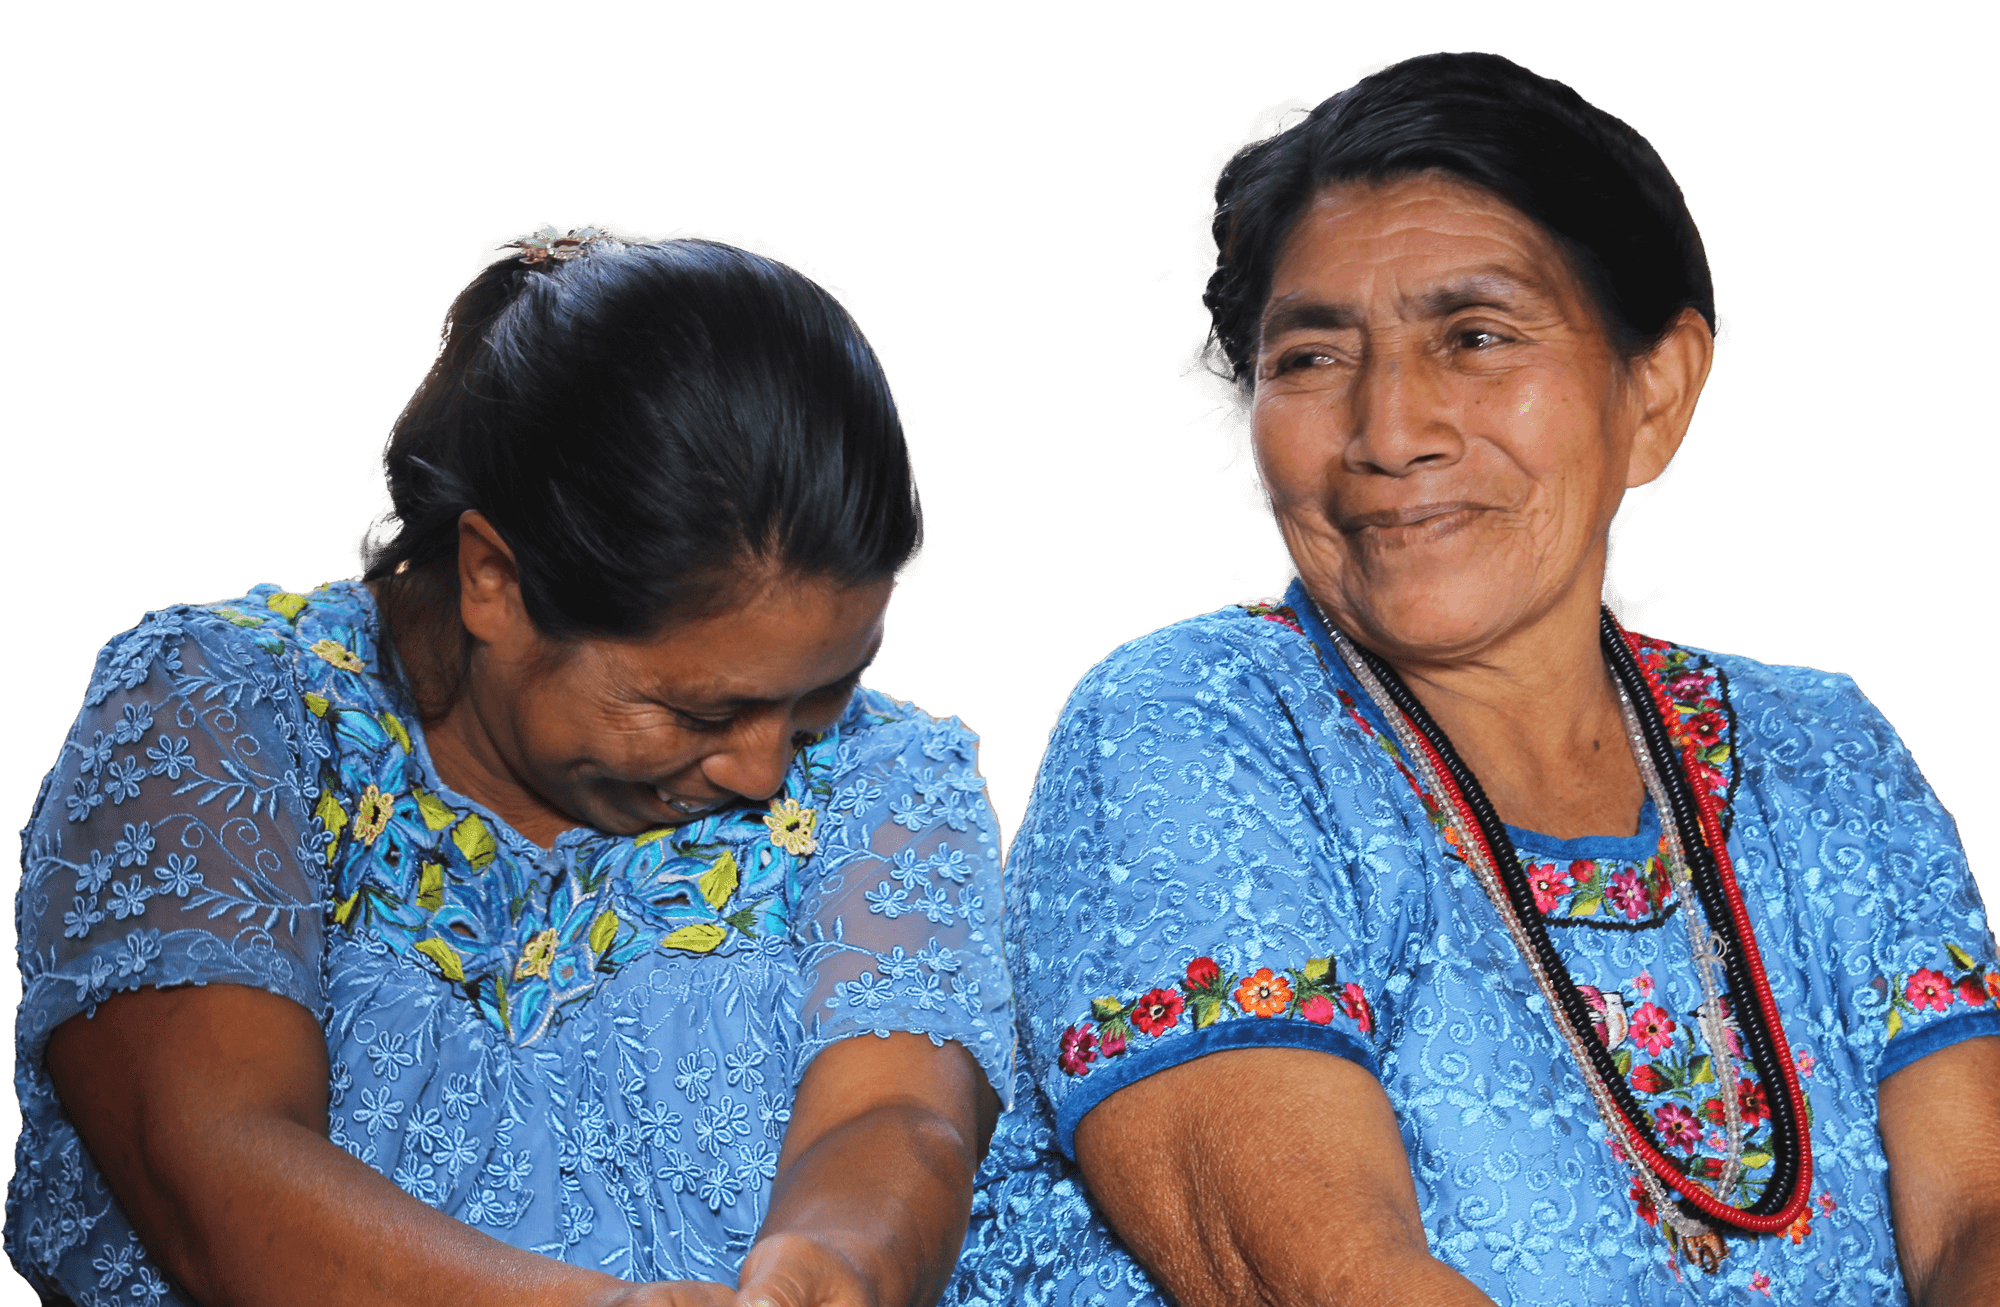 Guatemalan midwives